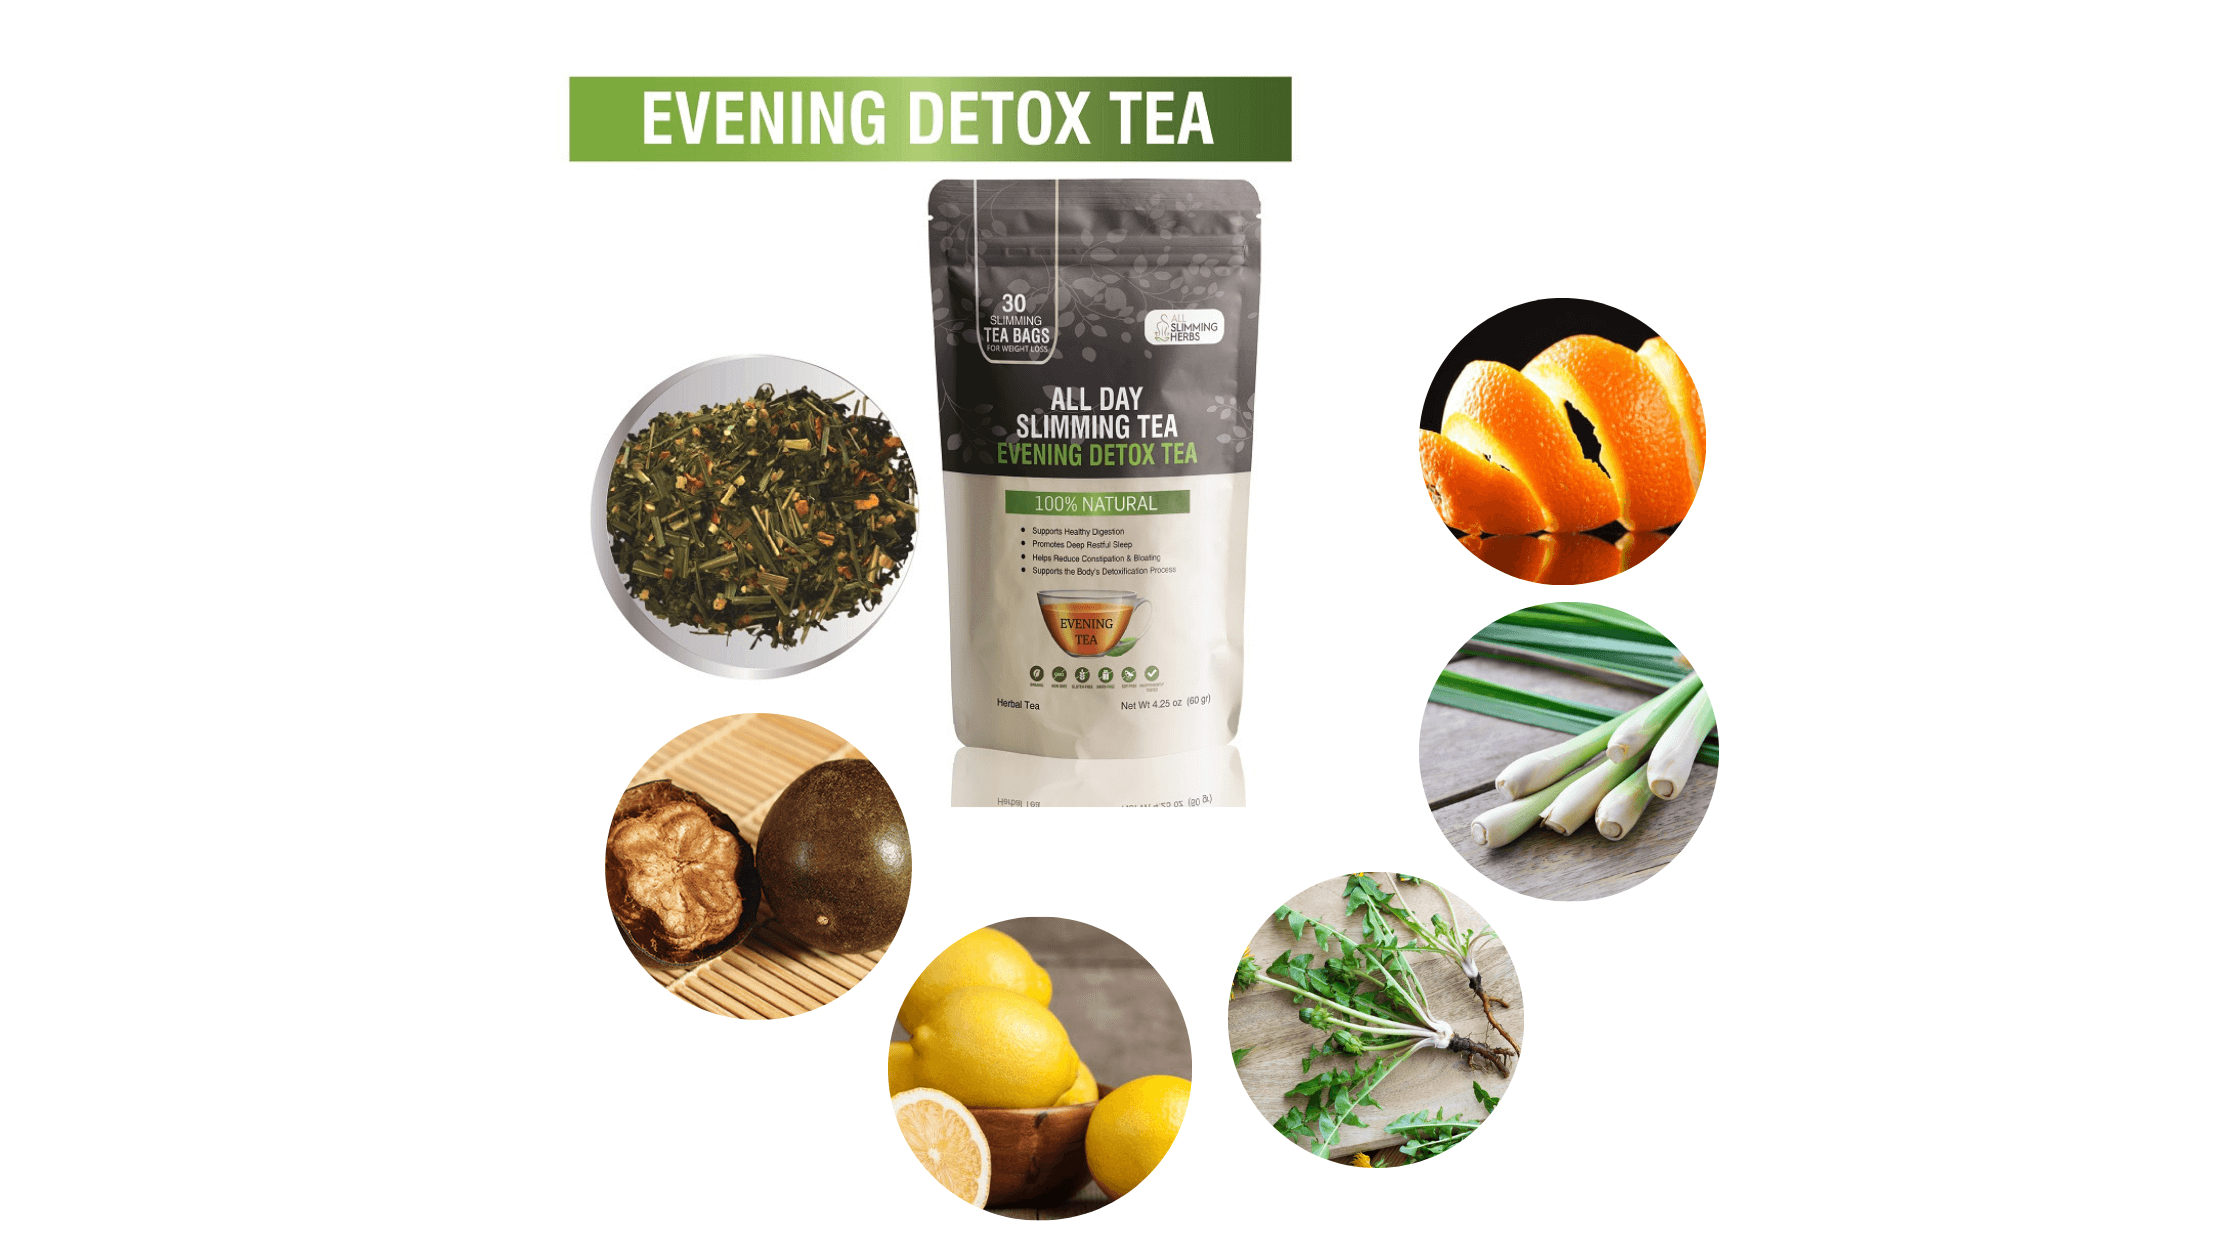 All Day Slimming Evening Detox Tea Ingredients